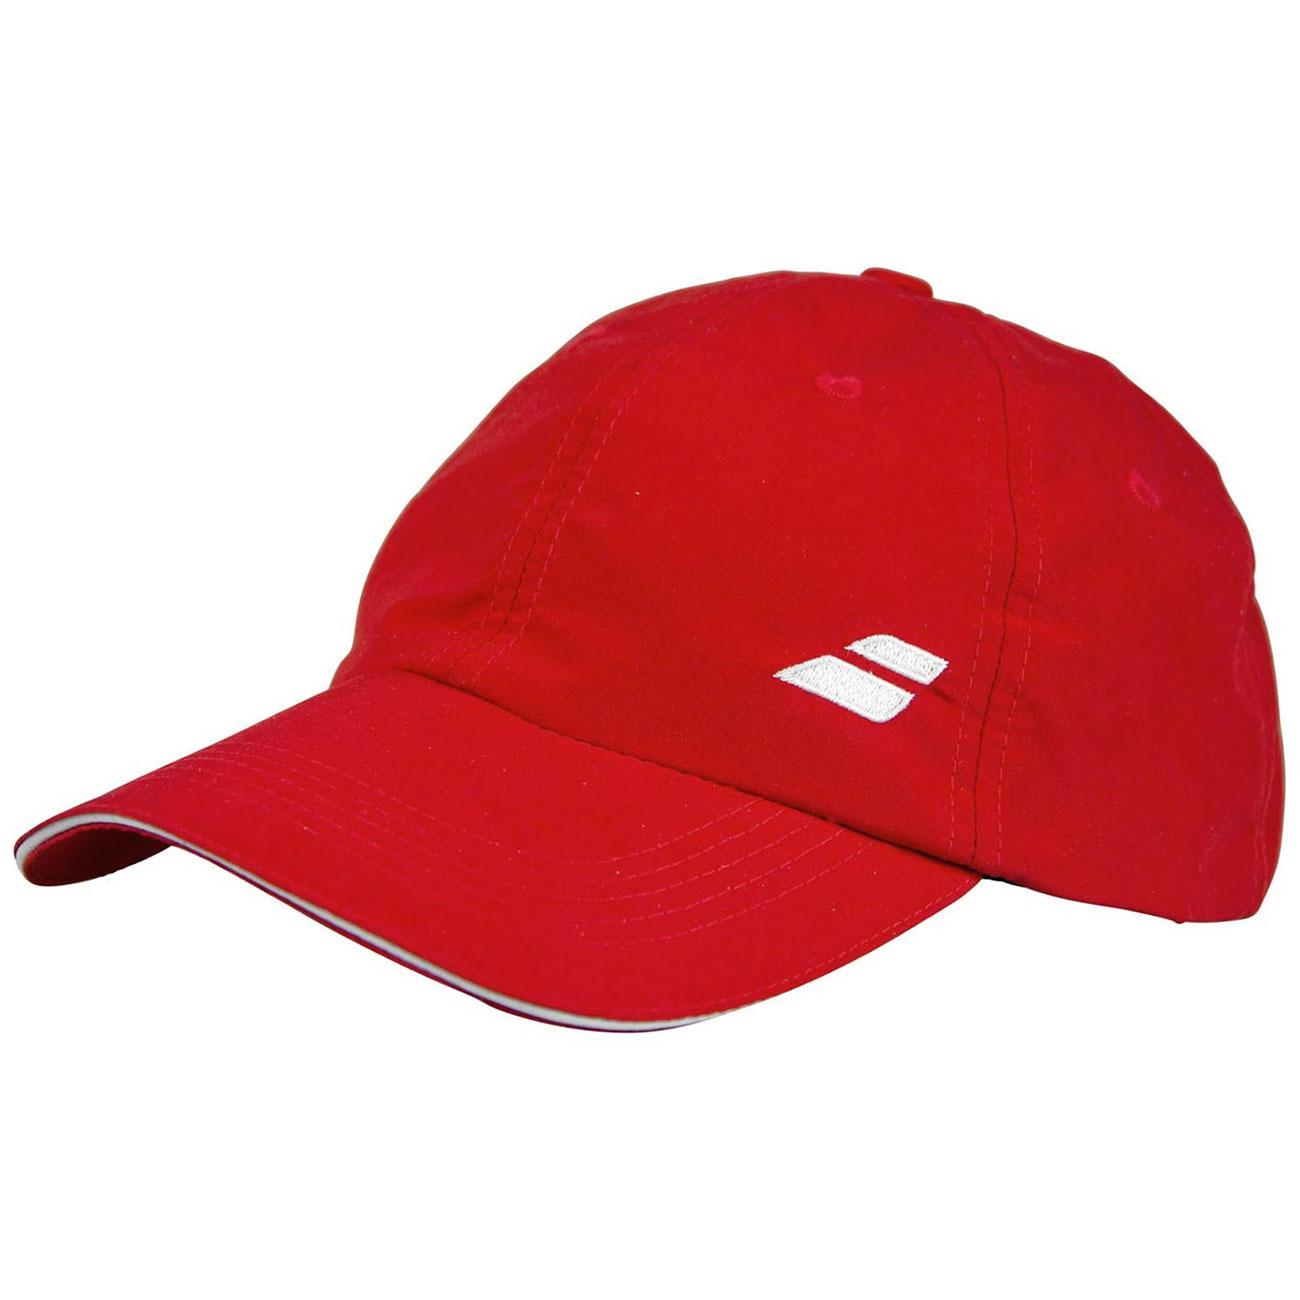 Babolat Adult Basic Logo Cap - Red - Tennisnuts.com